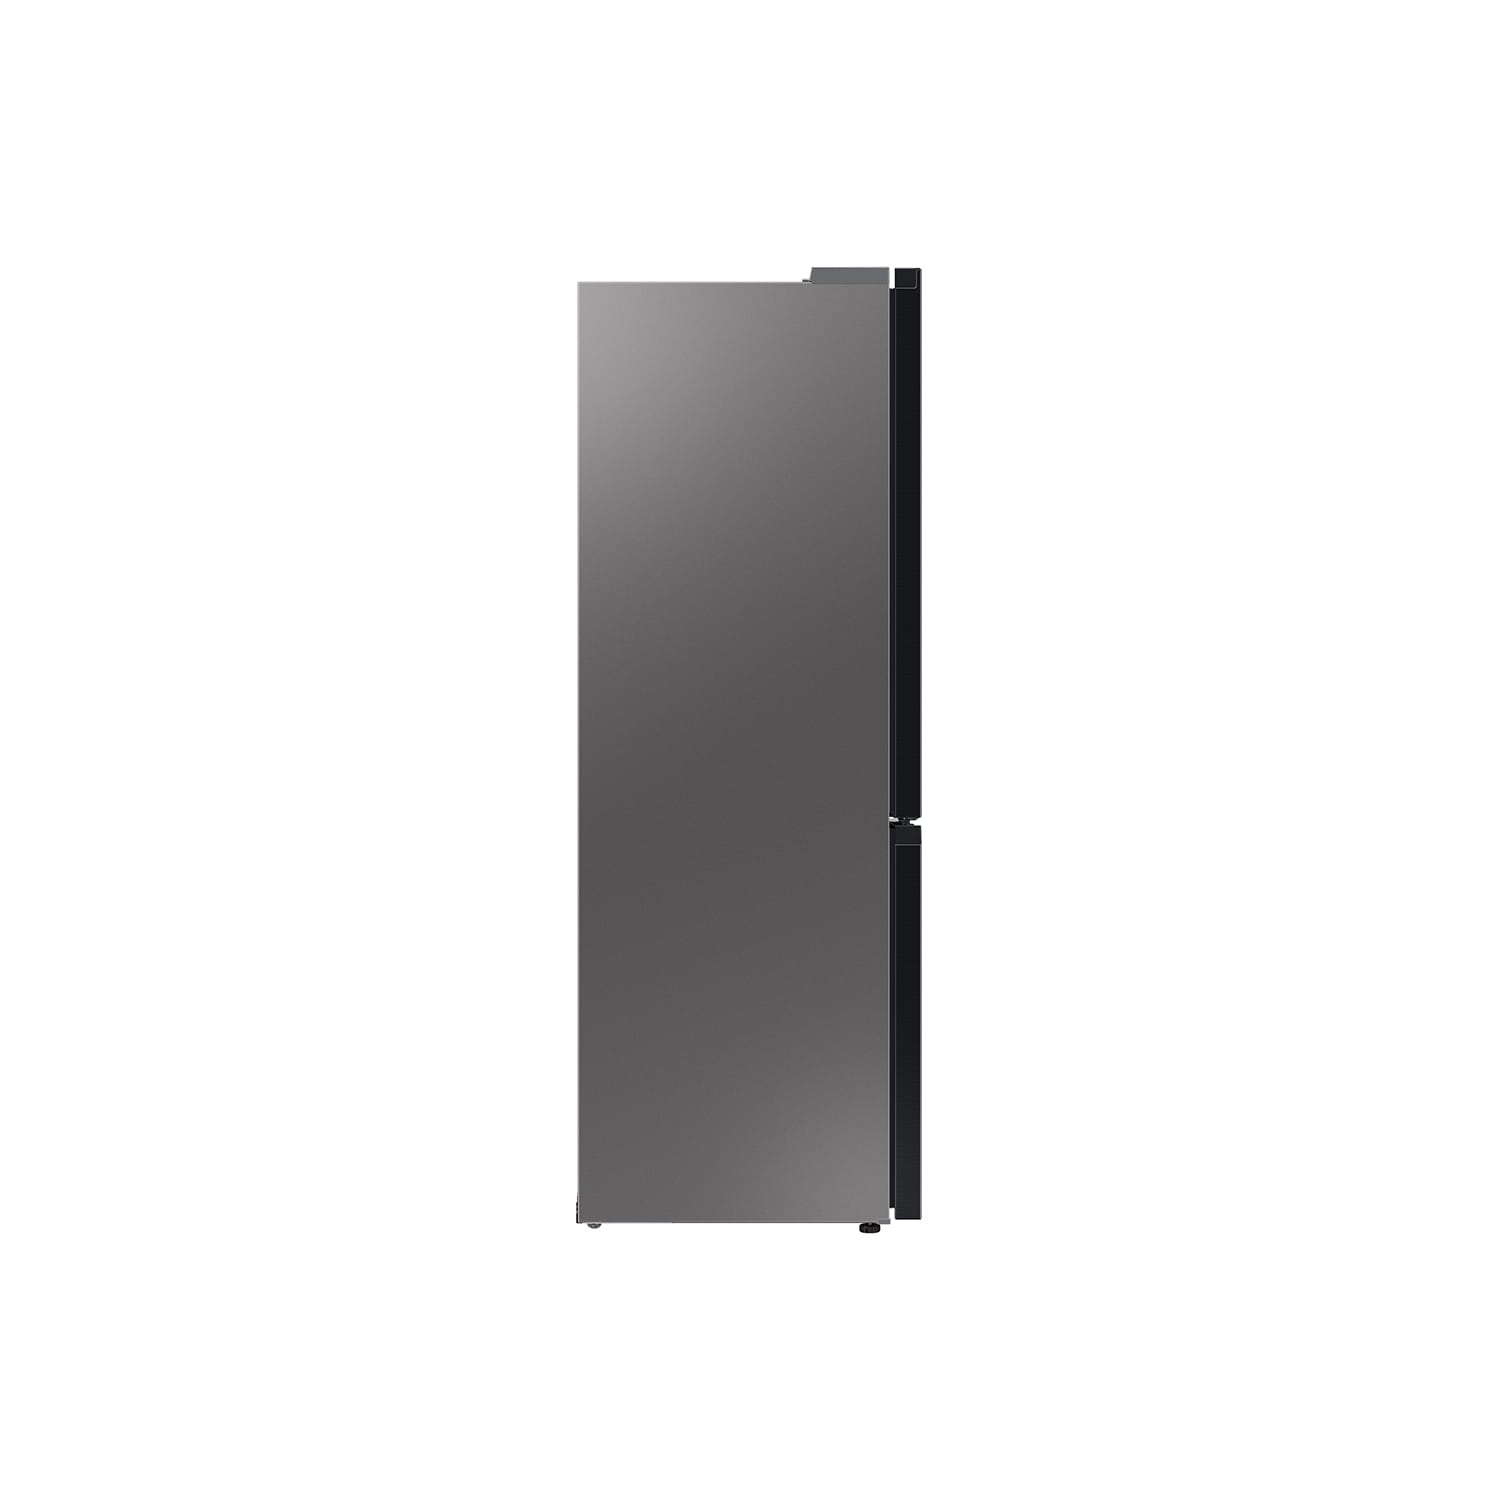 Samsung RB34T632EBN 60cm Fridge Freezer - Black - Frost Free - 4